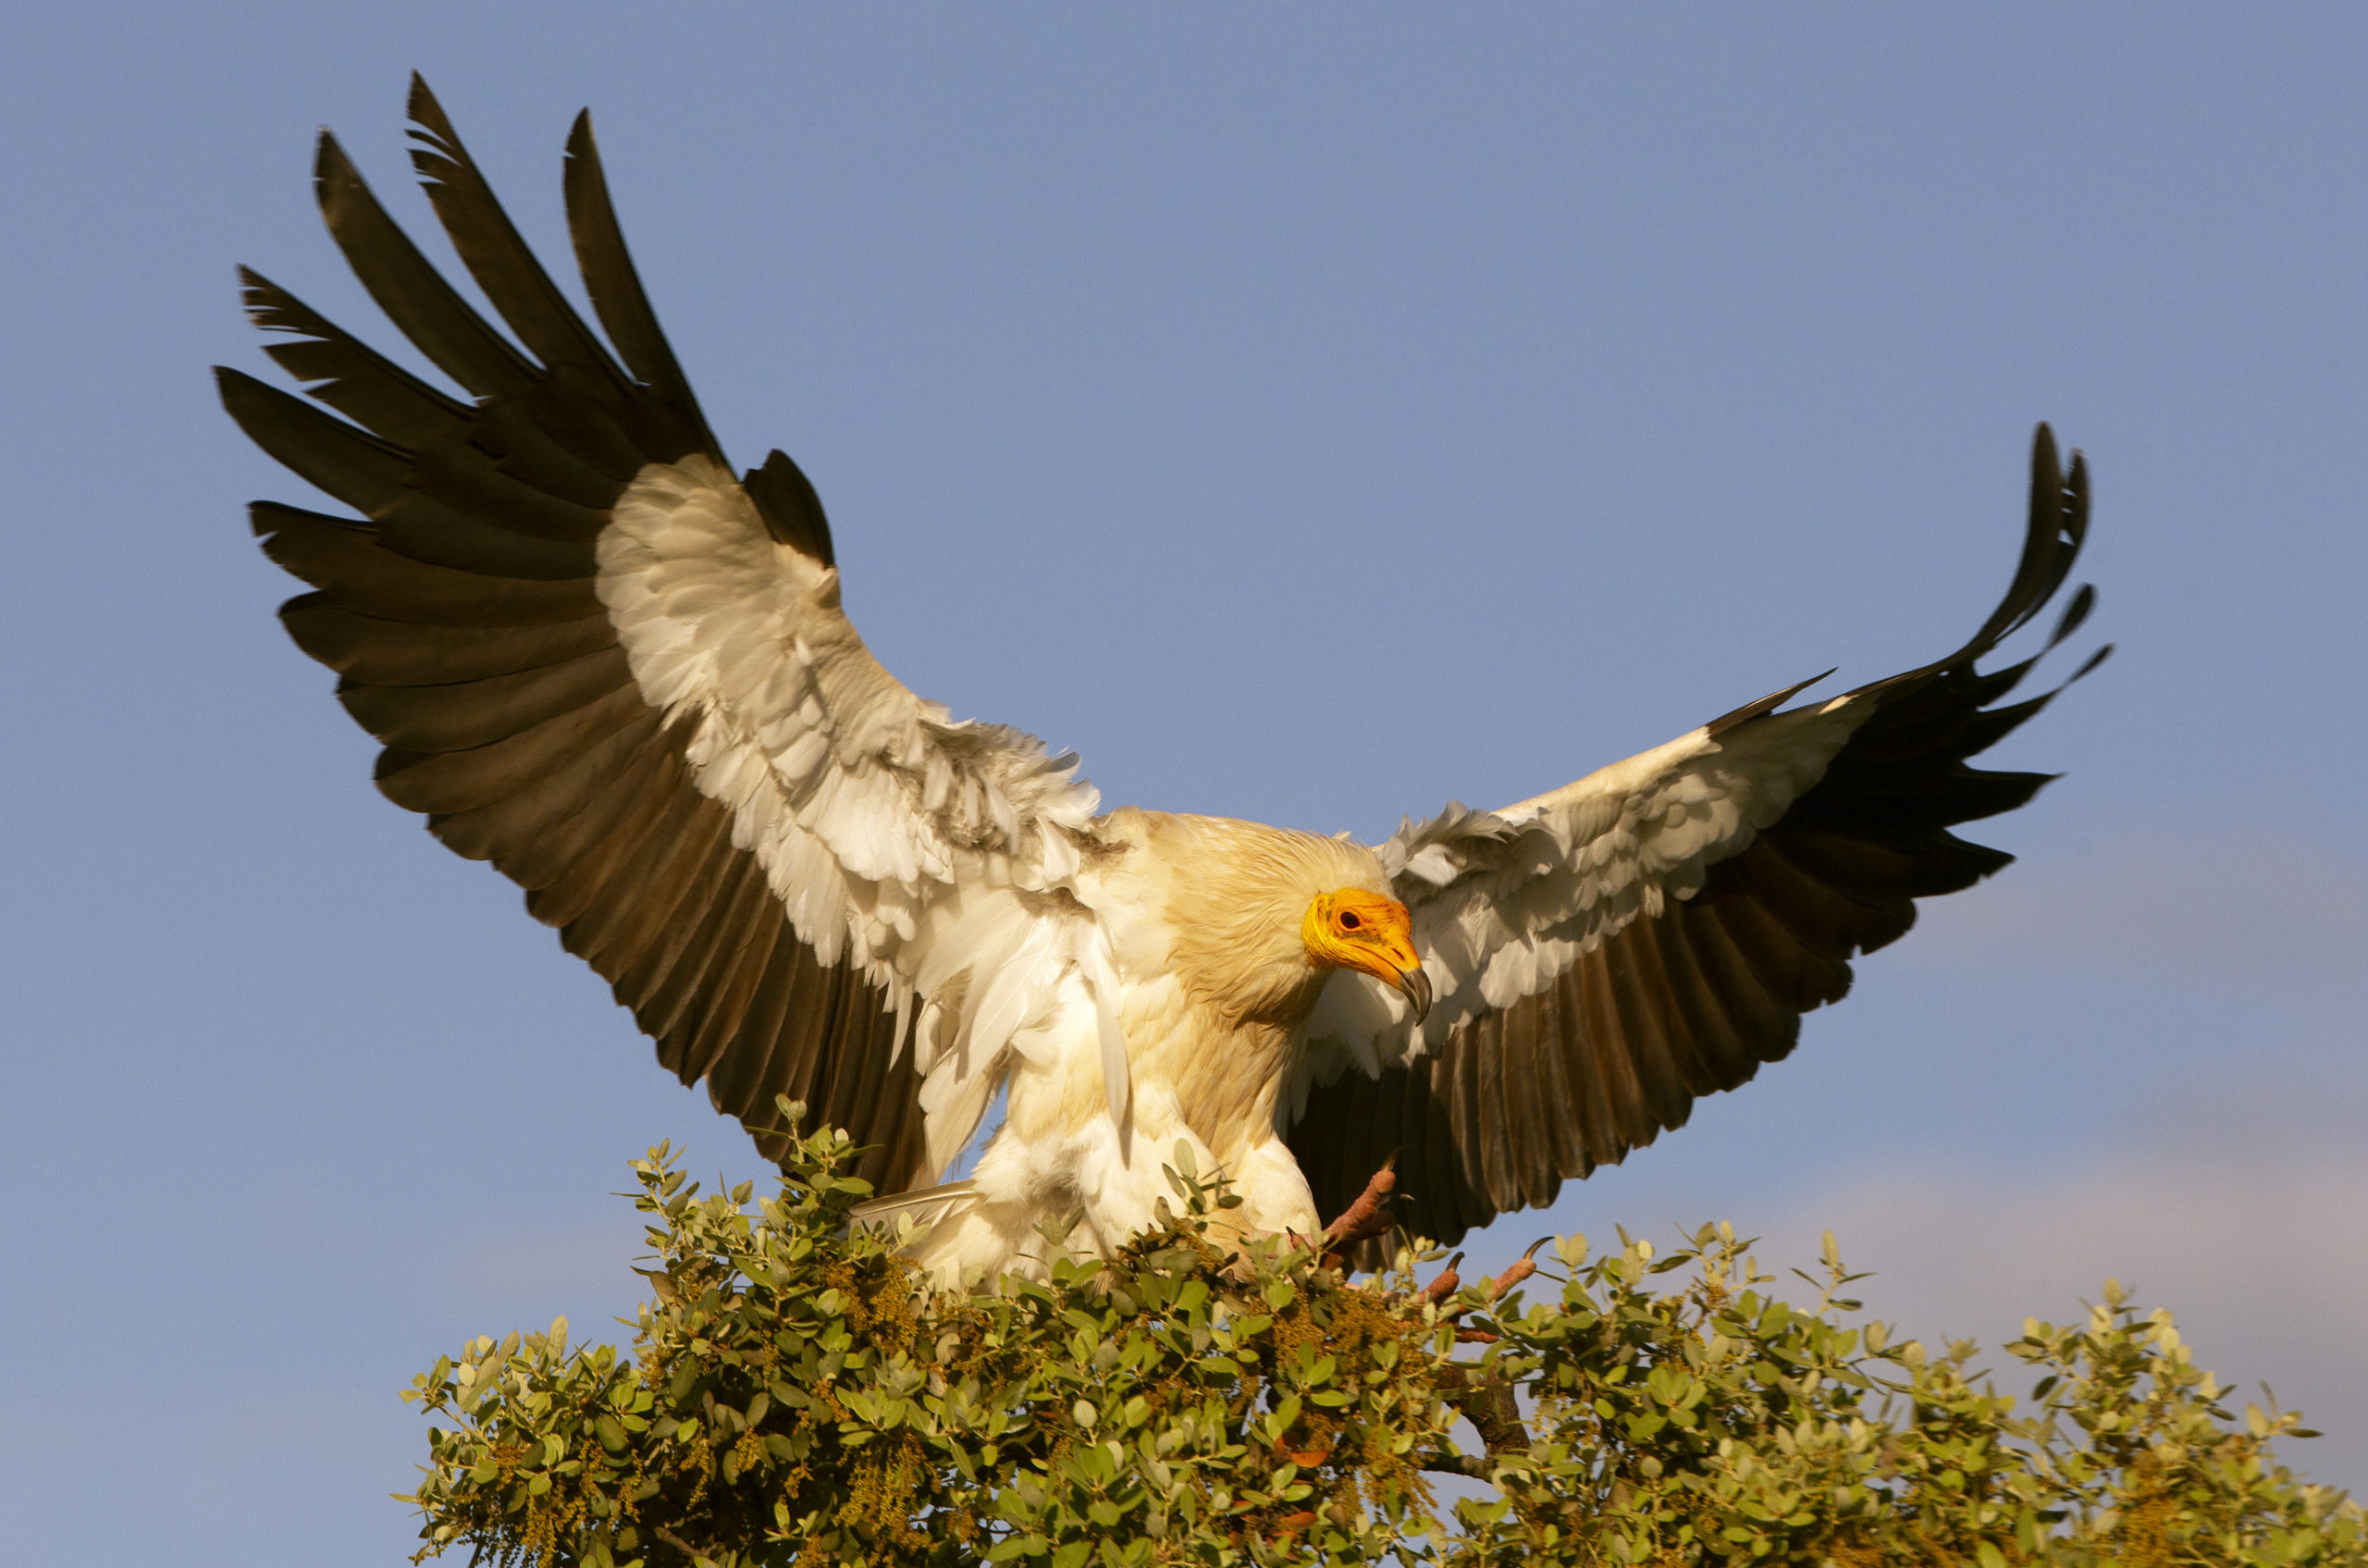 #FlightforSurvival: The Egyptian vulture